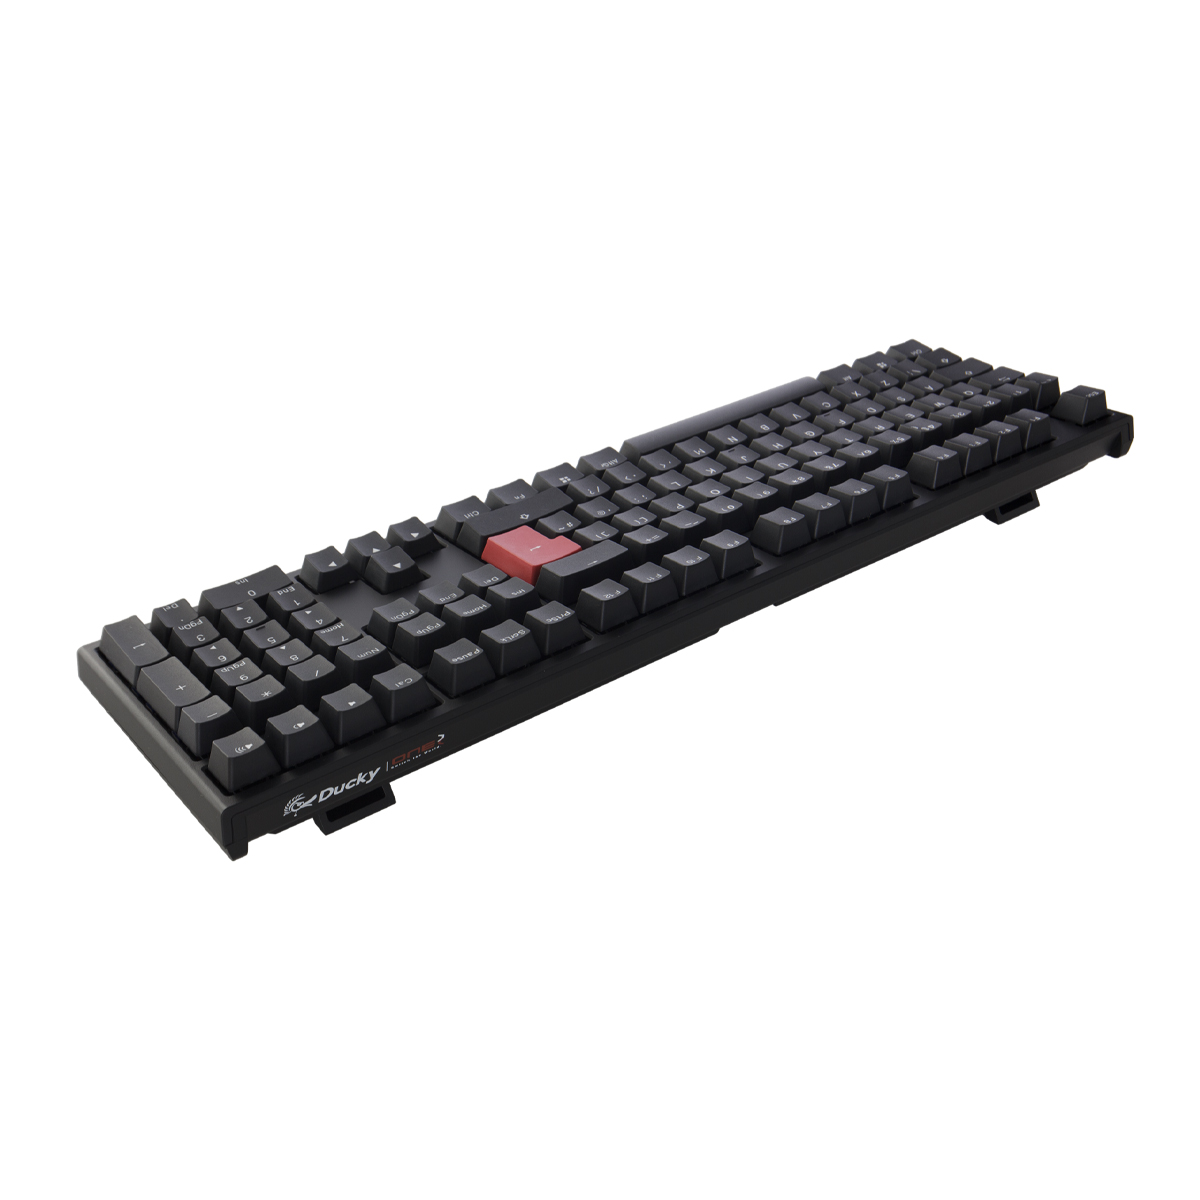 Ducky - Ducky One 2 Phantom Black Mechanical Gaming Keyboard Cherry MX Blue Switch - UK Layout